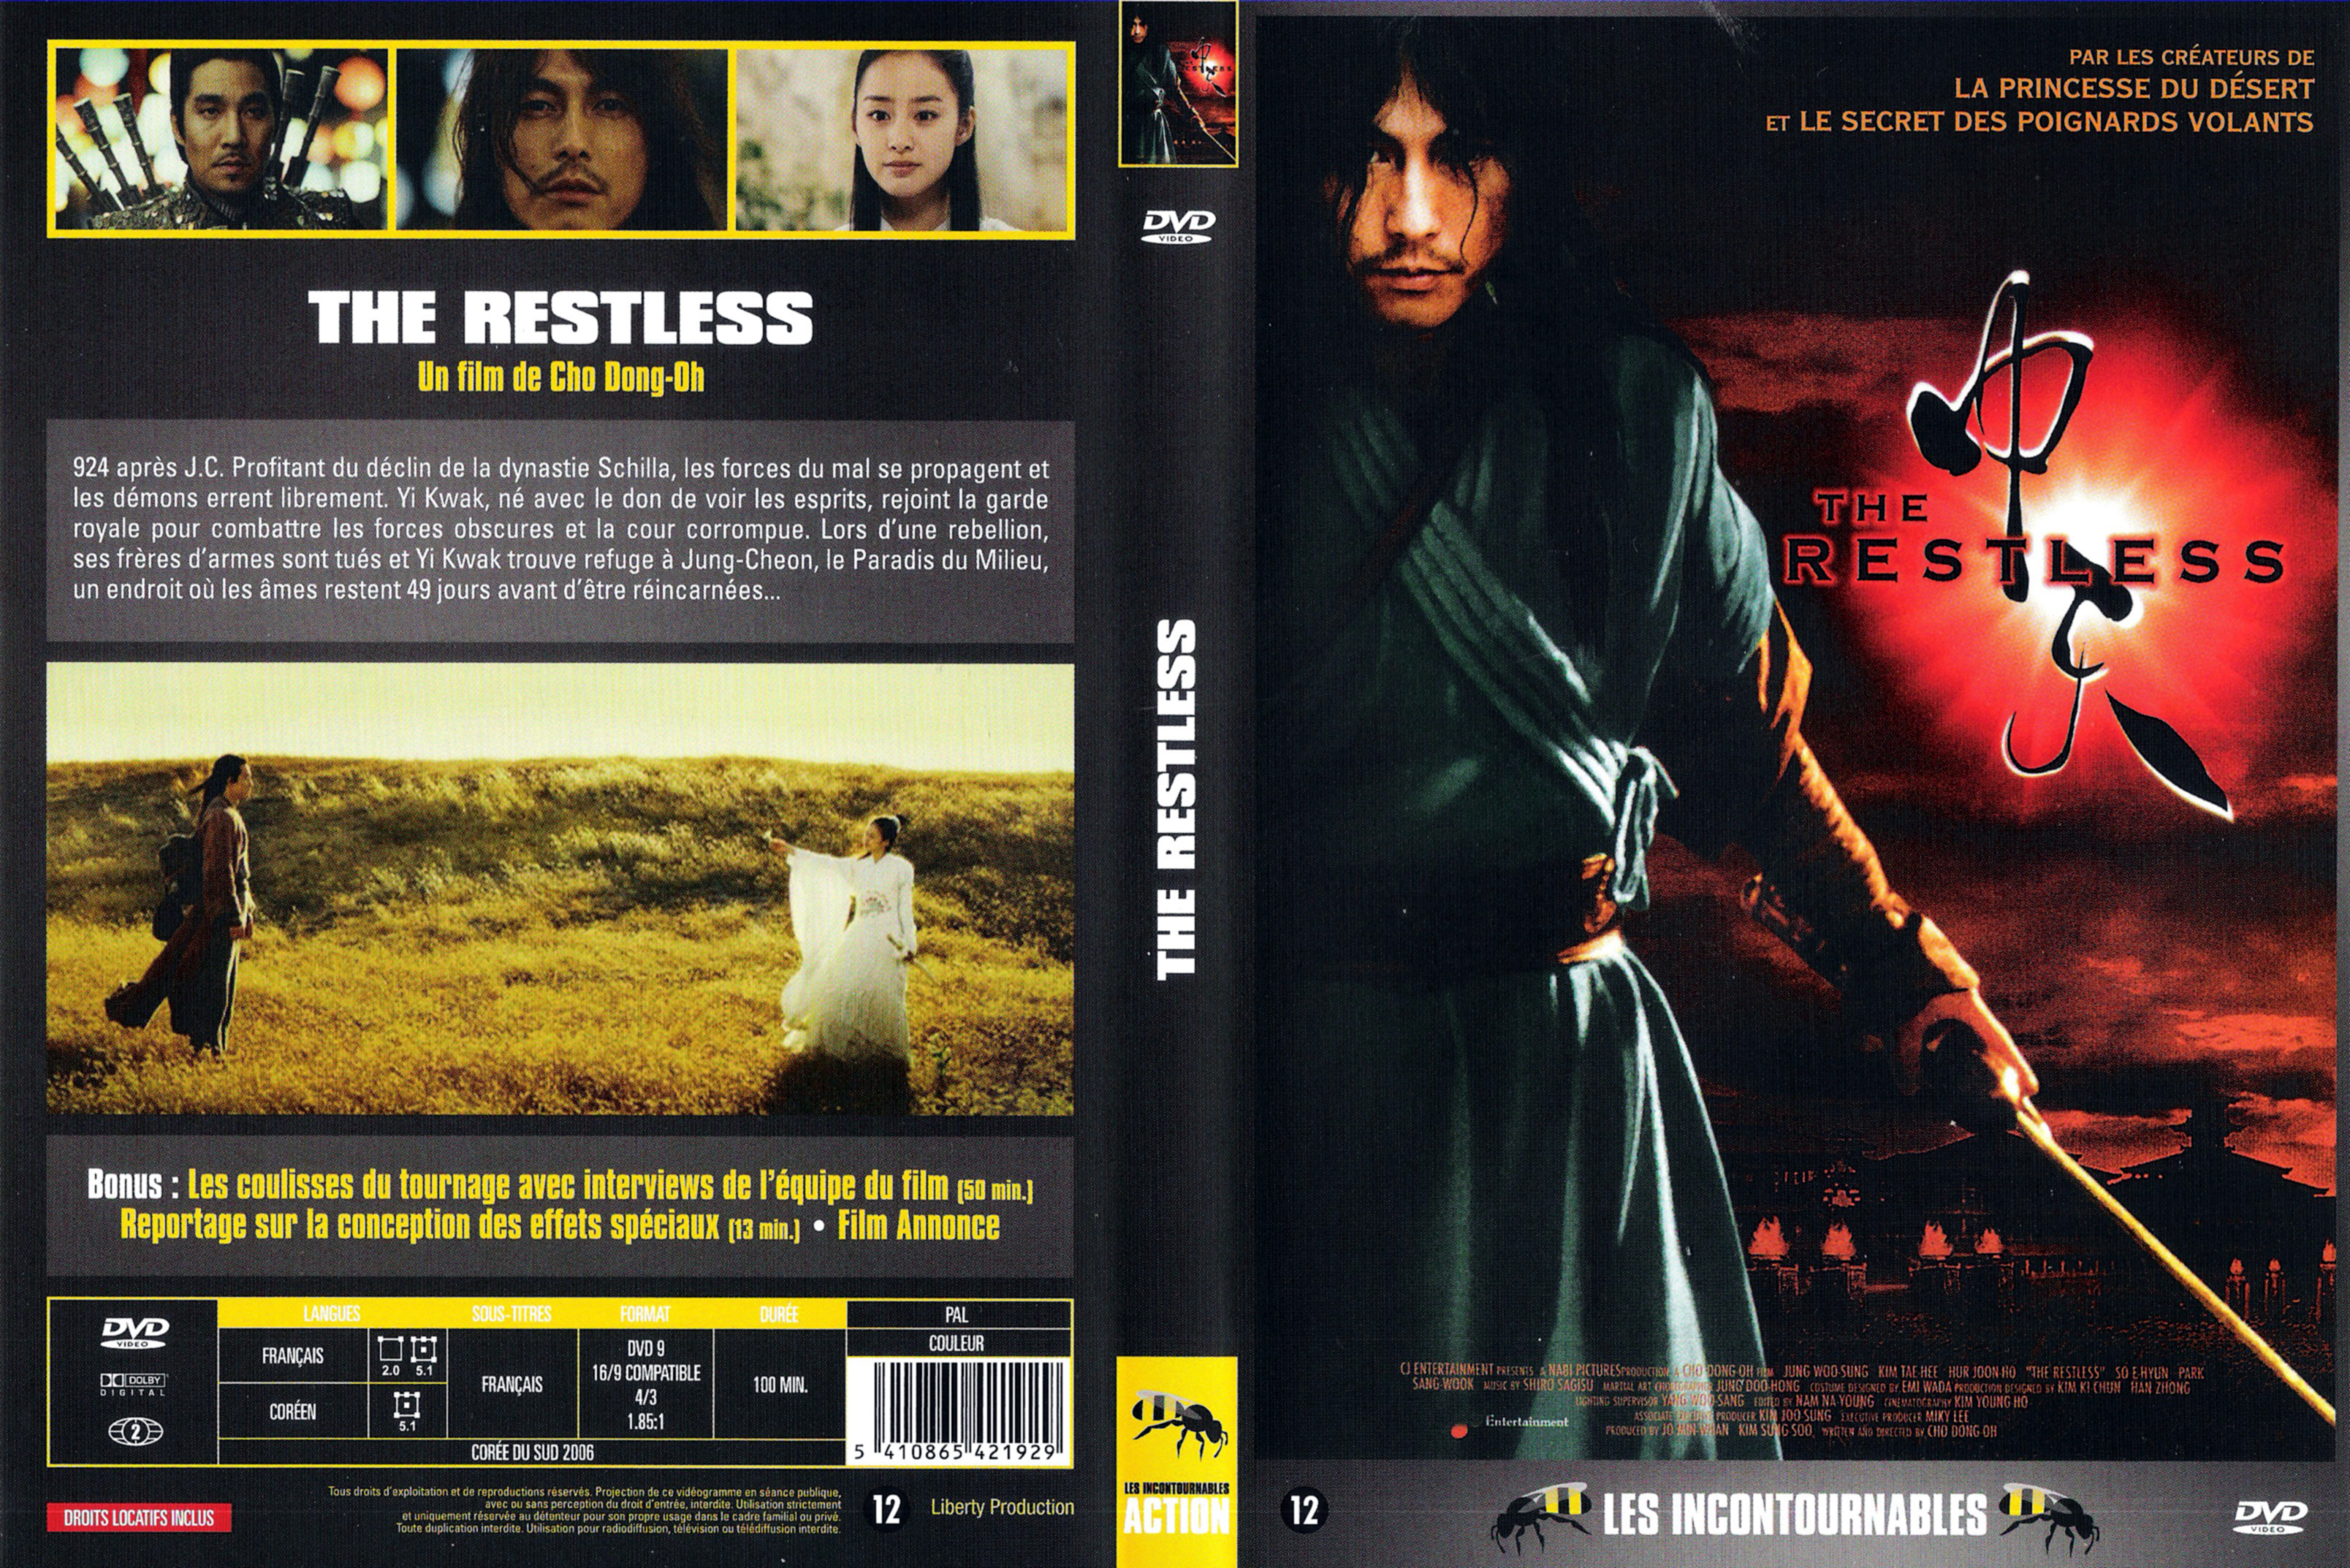 Jaquette DVD The restless v2